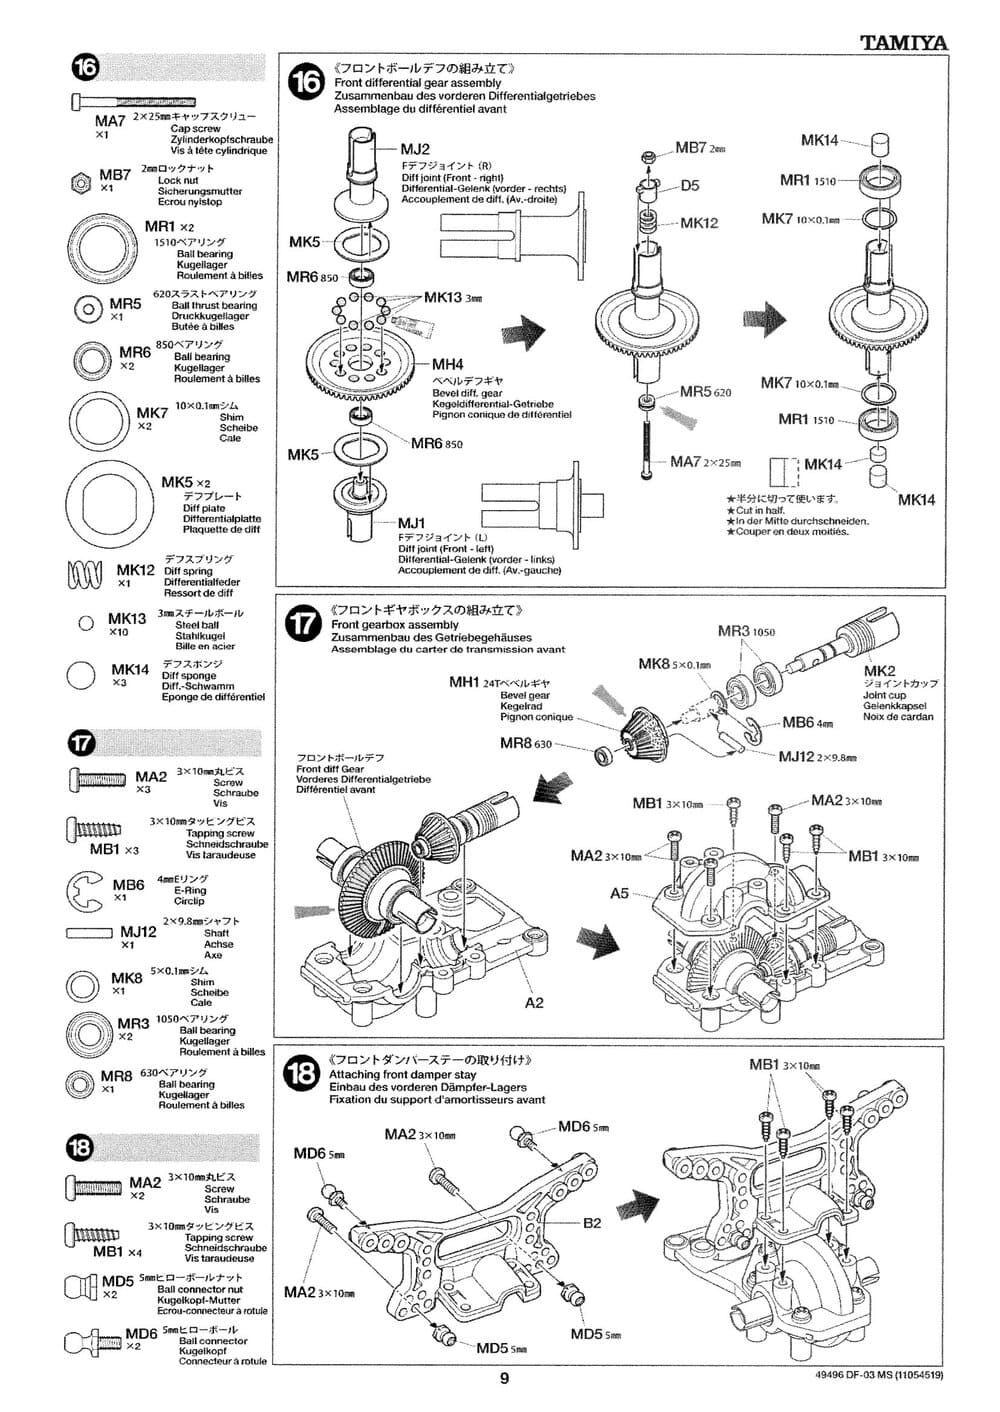 Tamiya - DF-03 MS Chassis Chassis - Manual - Page 9